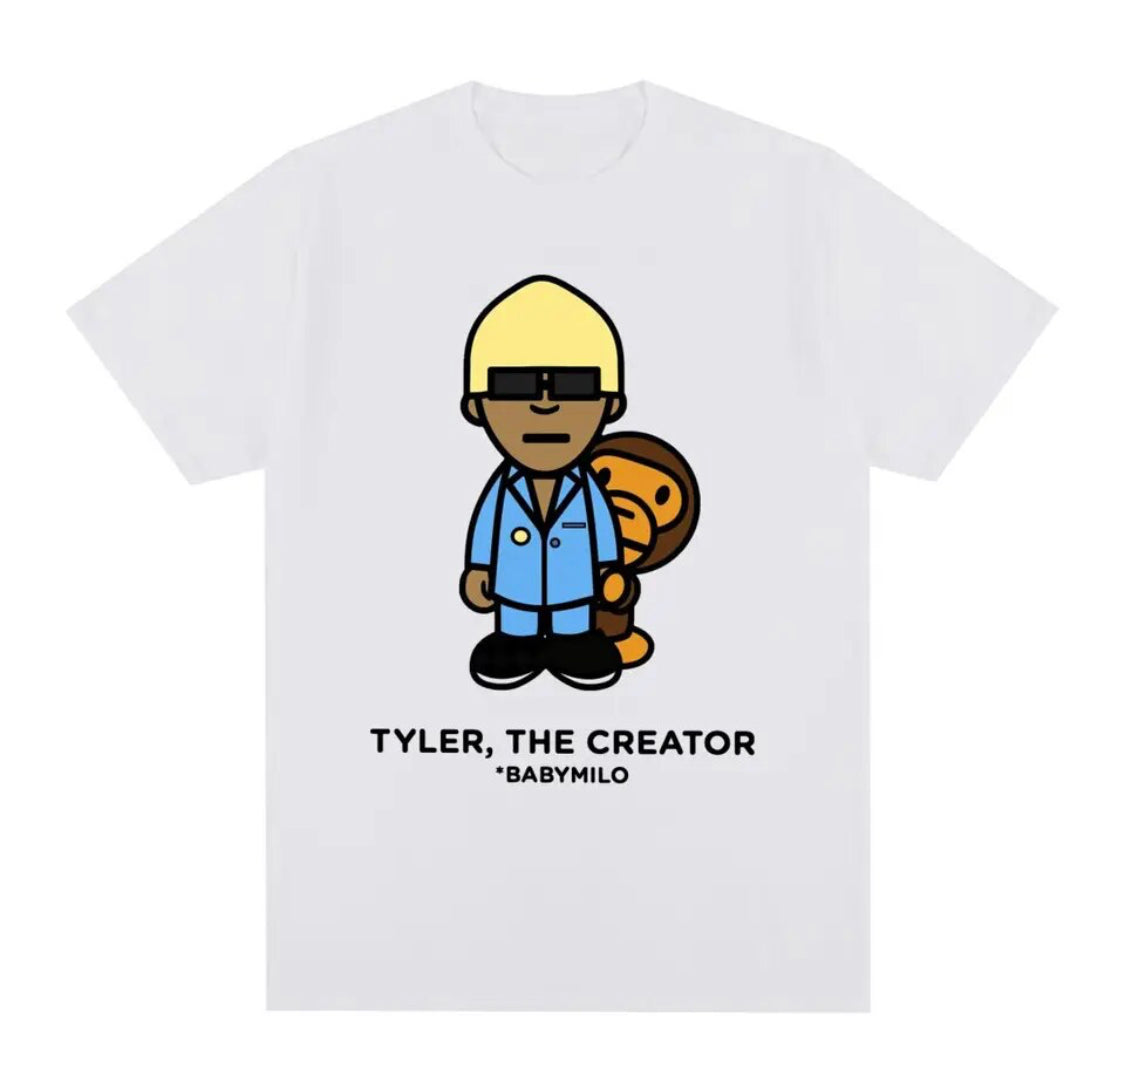 Tyler, the creator baby milo T-shirt